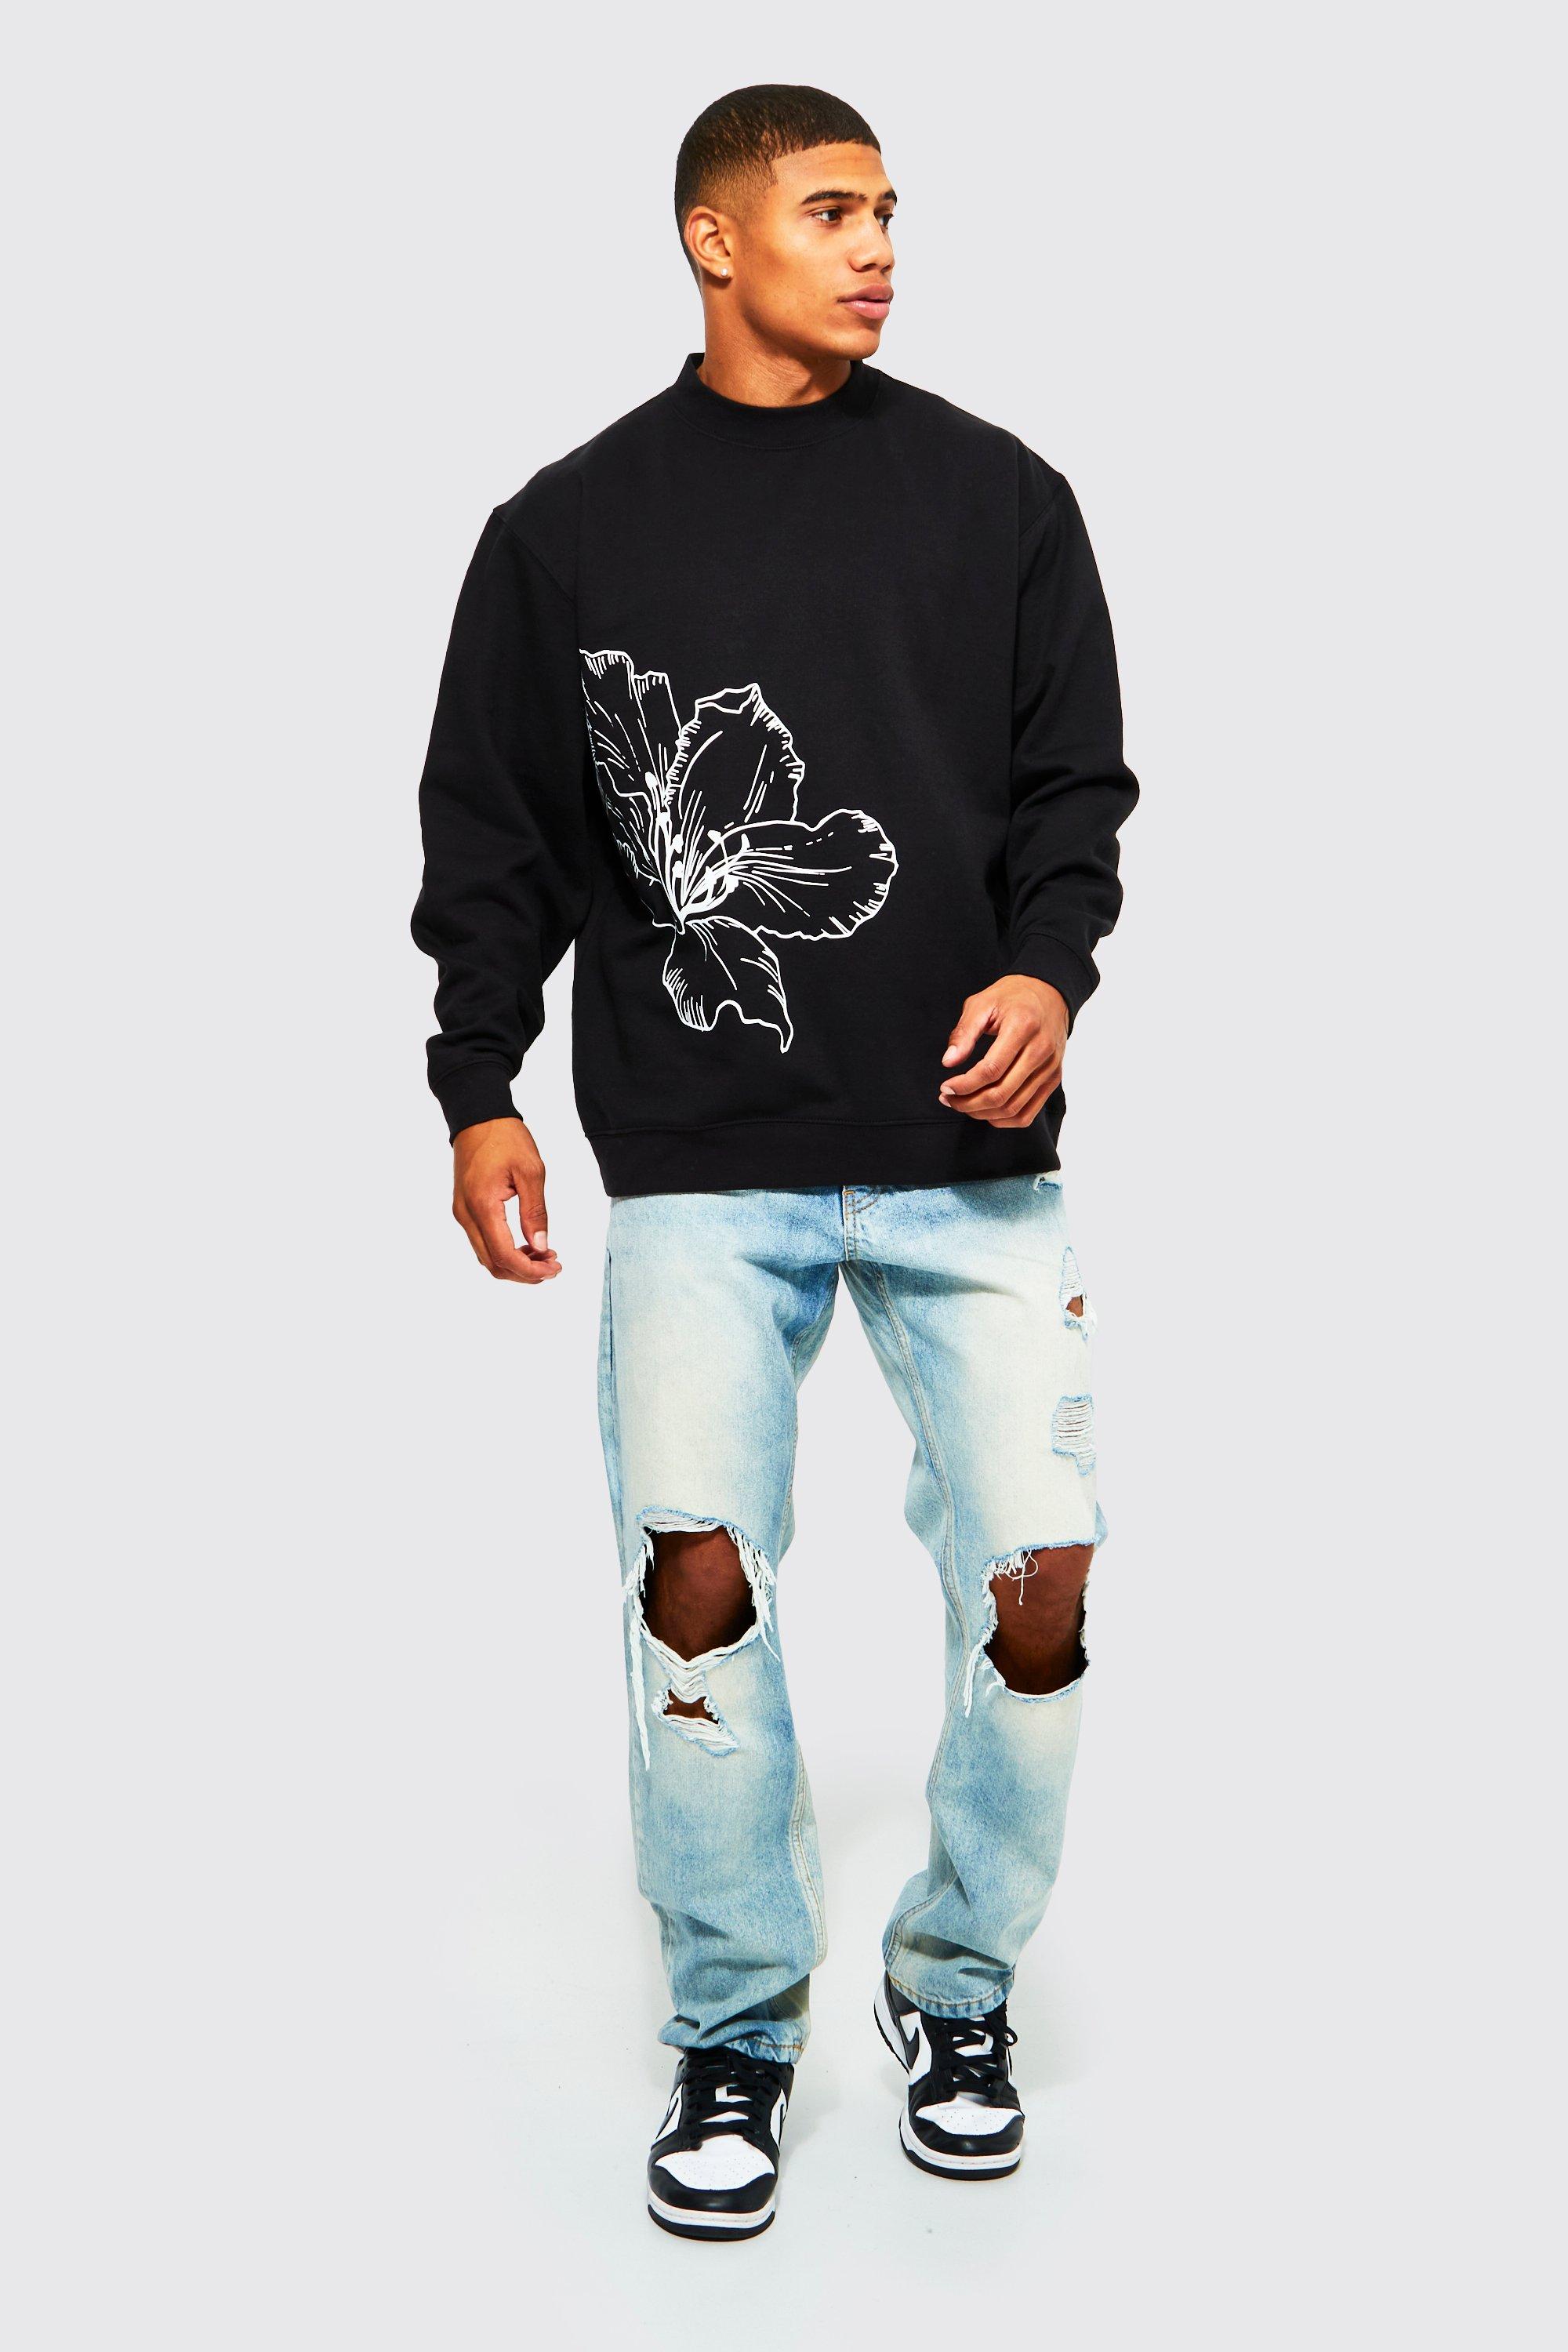 boohooMAN Mens Oversized Line Drawn Flower Print Sweatshirt - Black